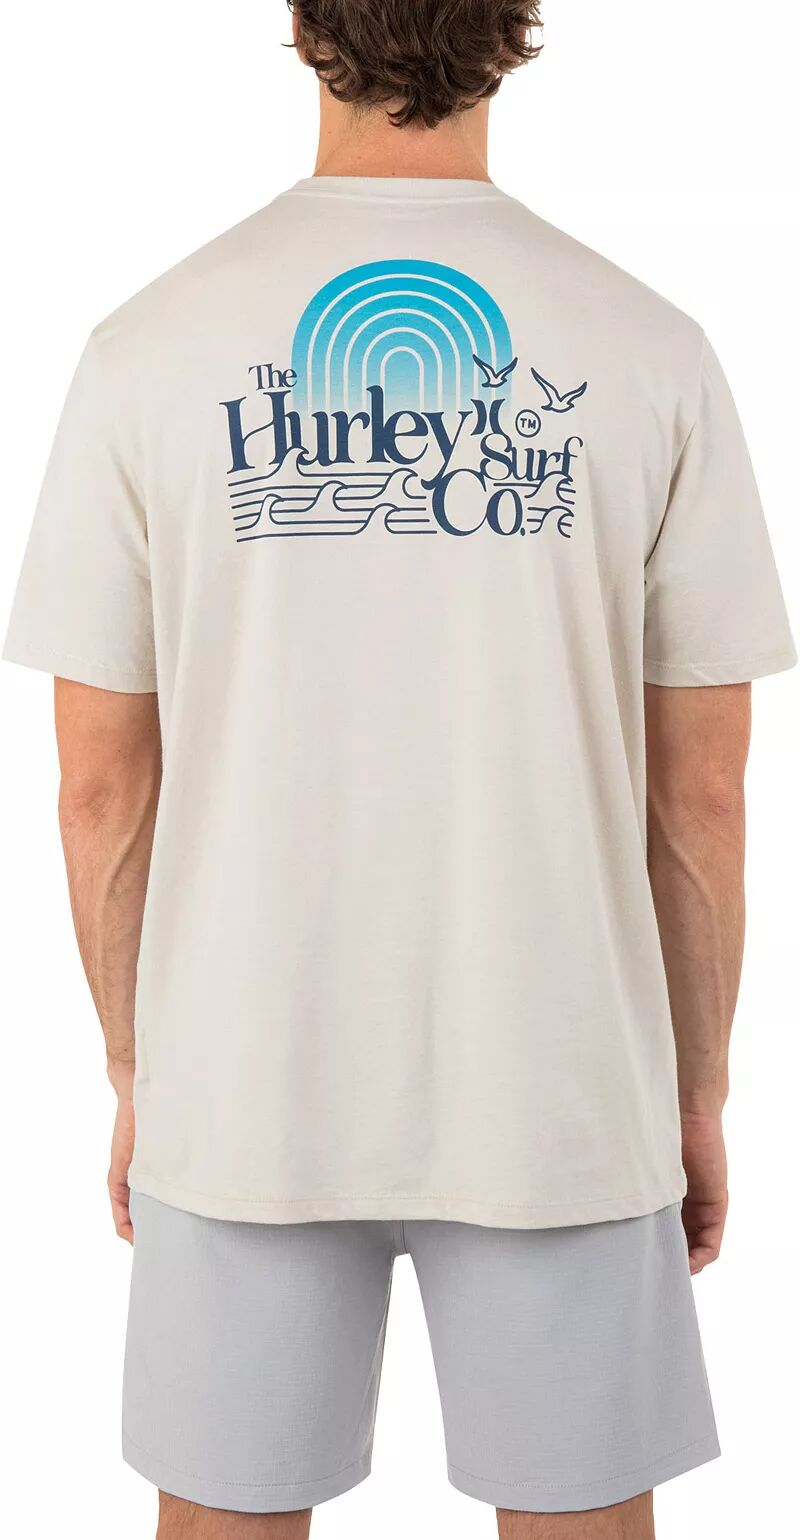 Мужская повседневная футболка Hurley Windswell с короткими рукавами мужская повседневная футболка с короткими рукавами и четырьмя углами hurley